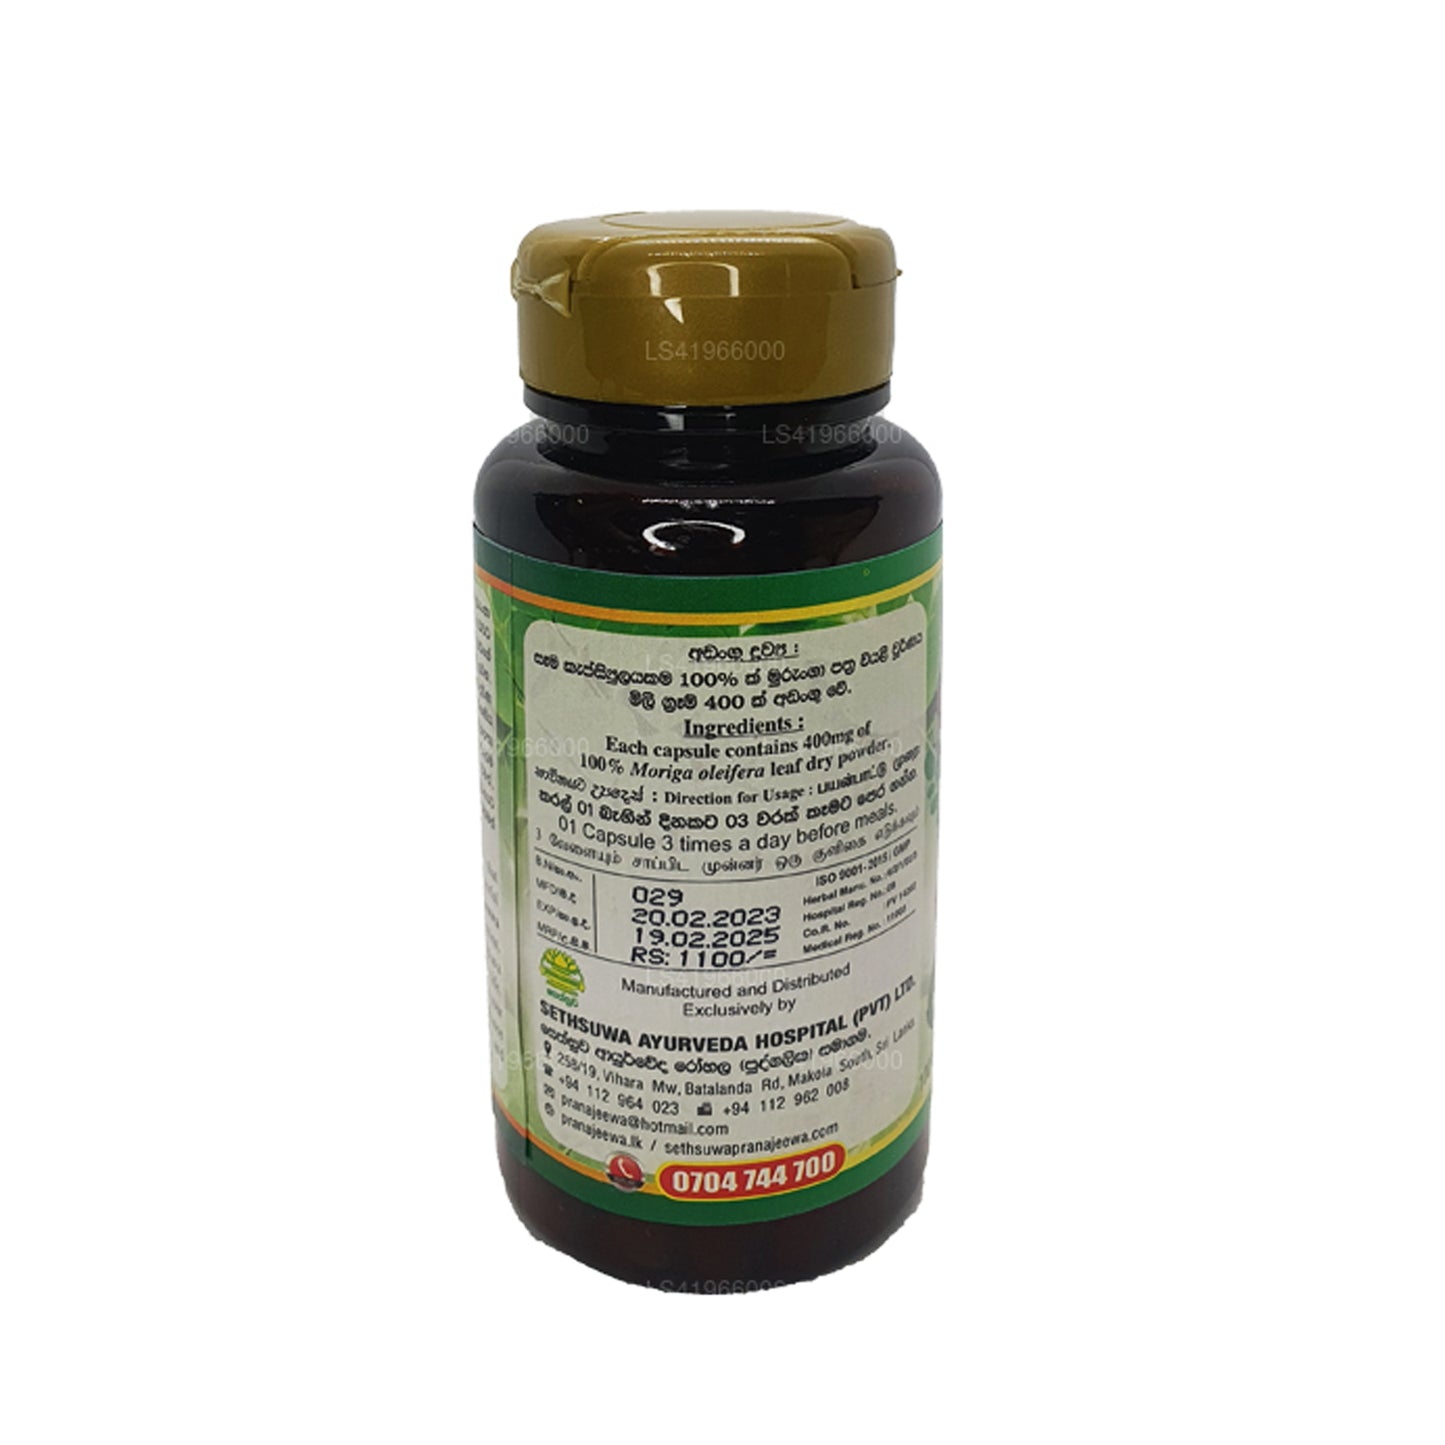 Moringa Sethsuwa Biogen (400 mg x 90 capsules)